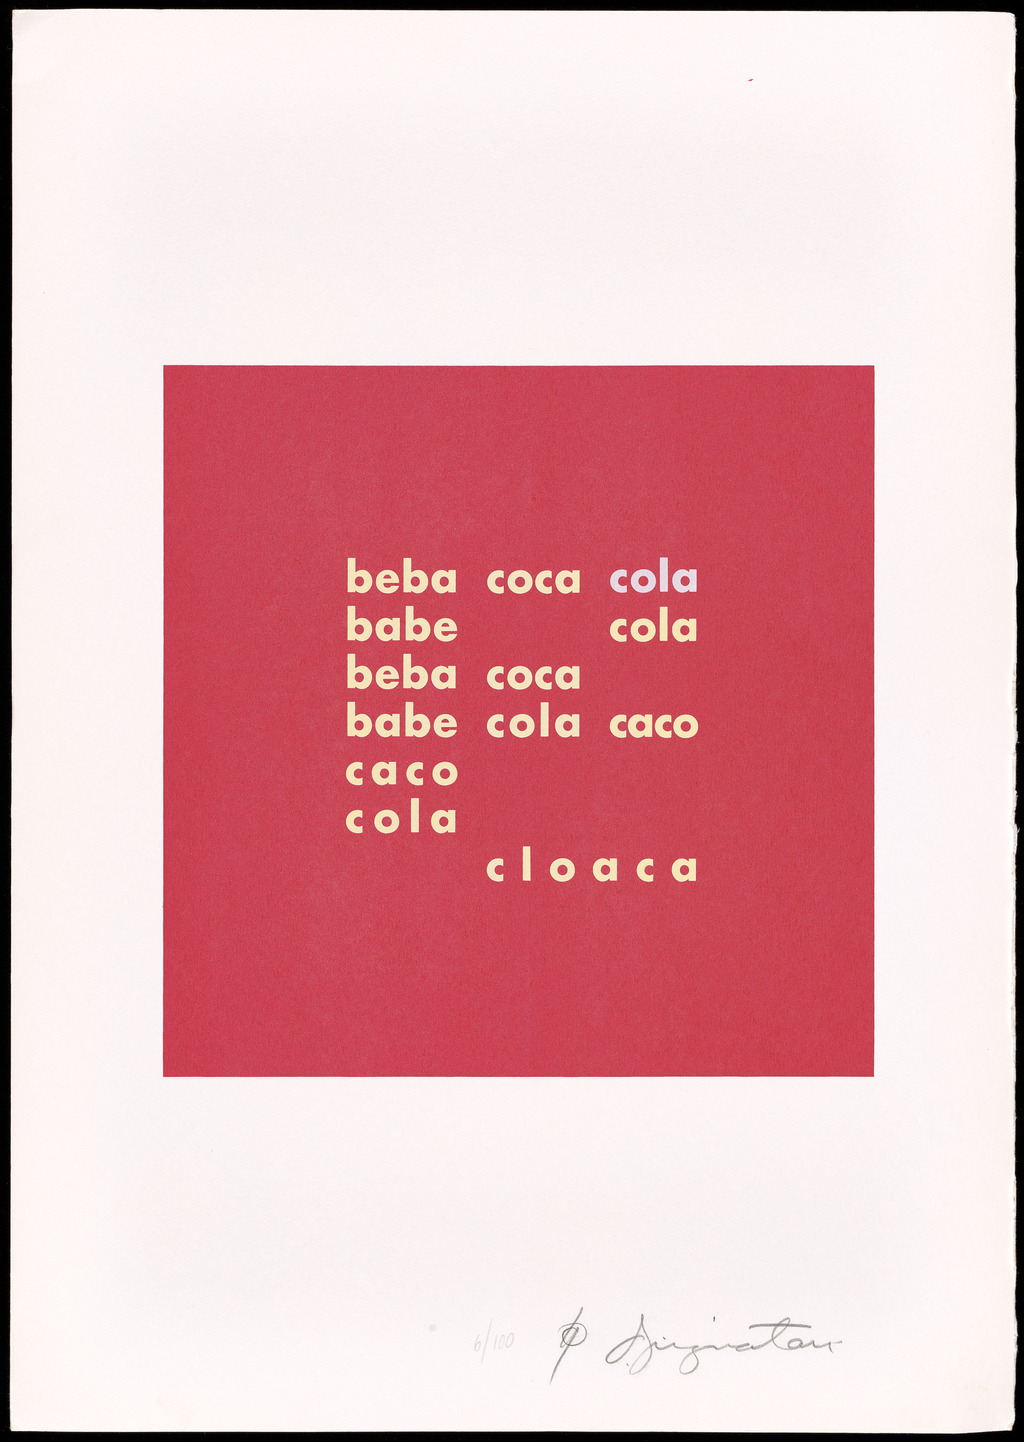 Concrete Poetry and Coca-Cola